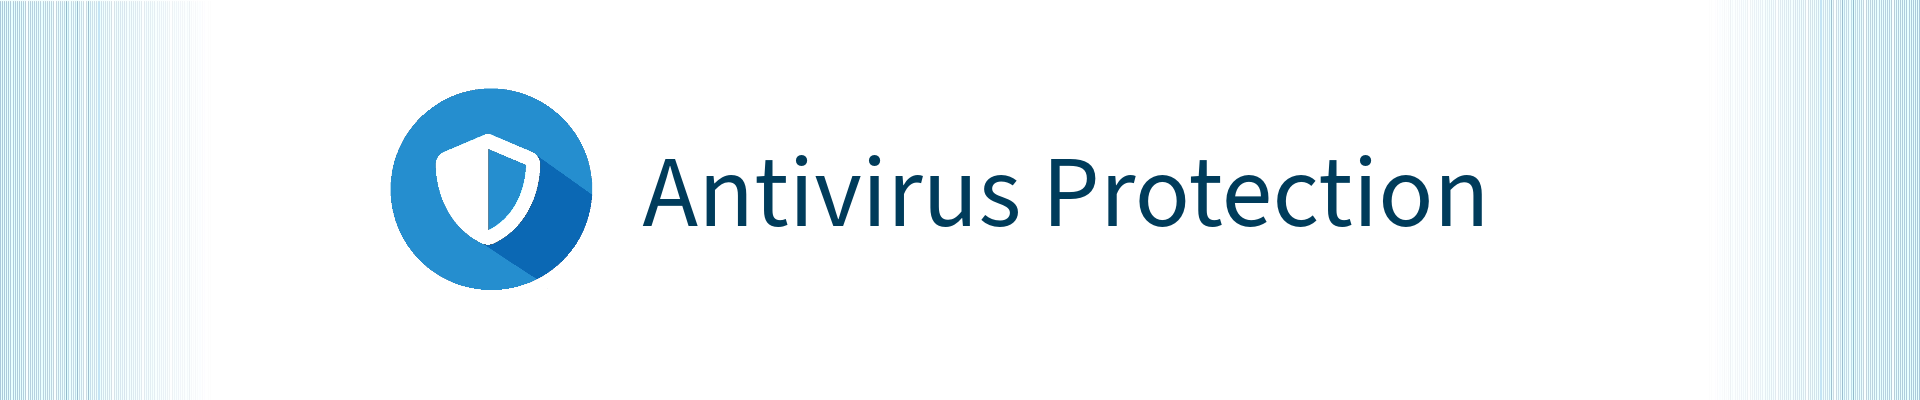 Antivirus Protection, GW Information Technology